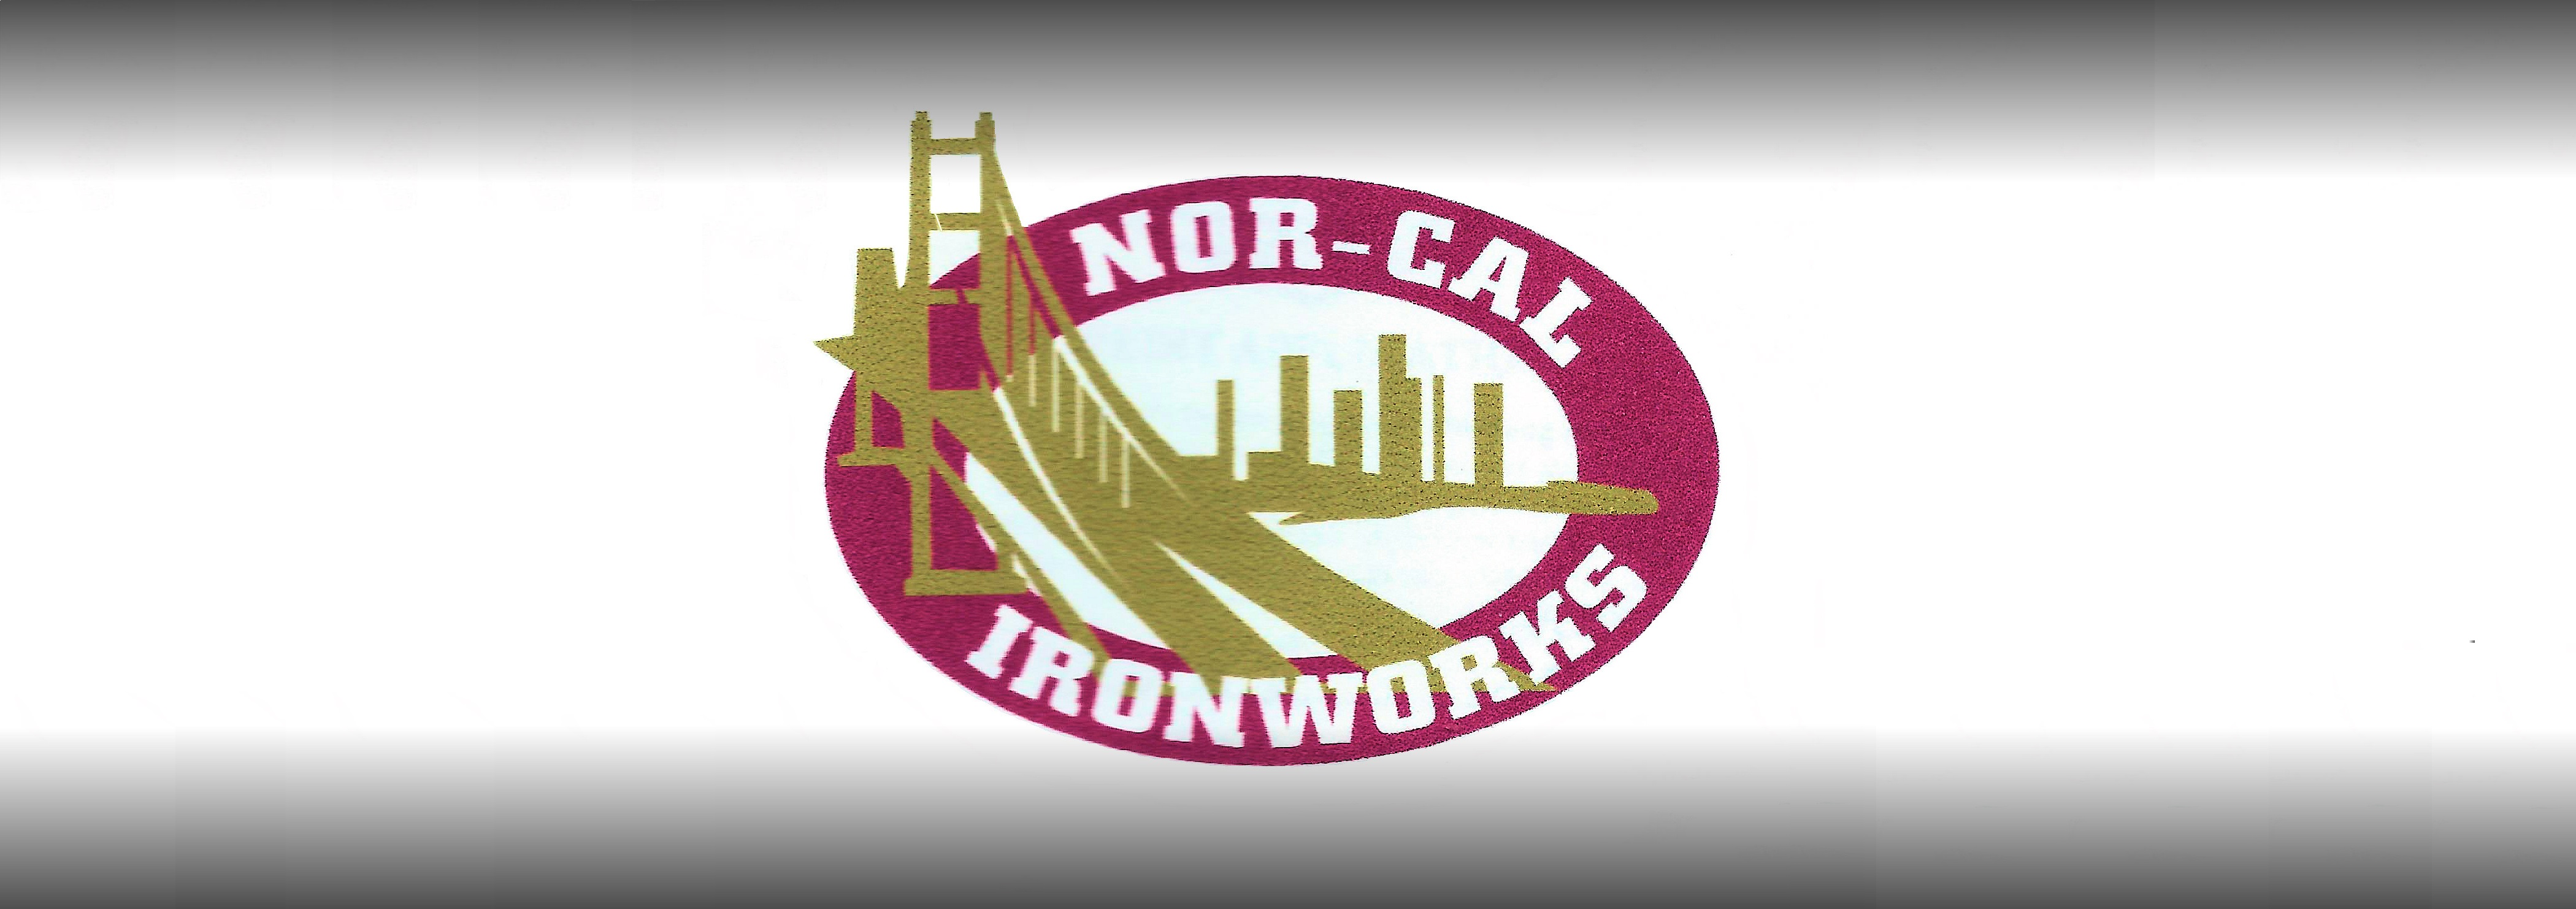 Nor Cal Iron Works Logo